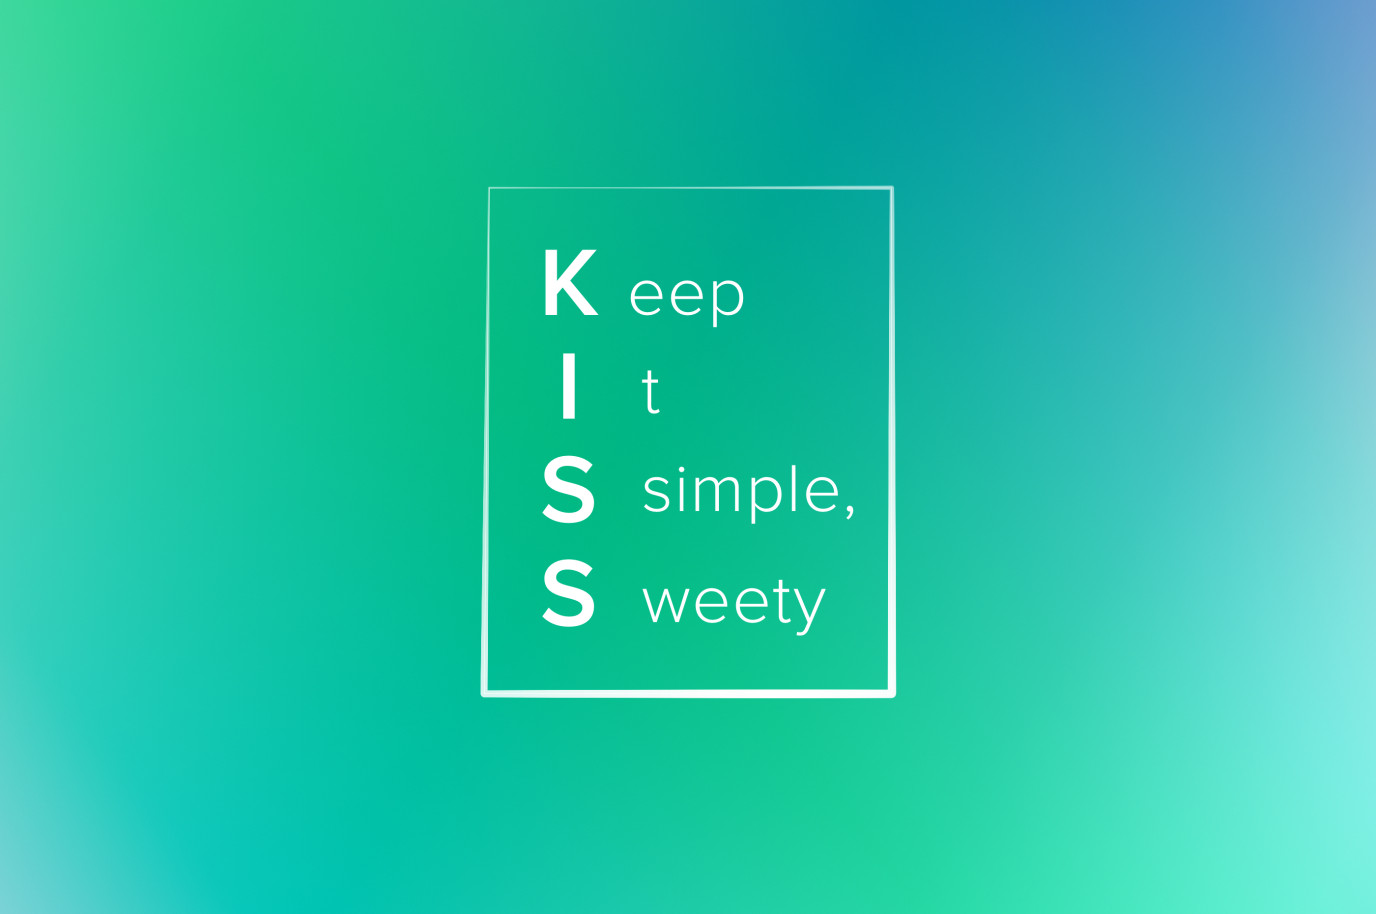 KISS method